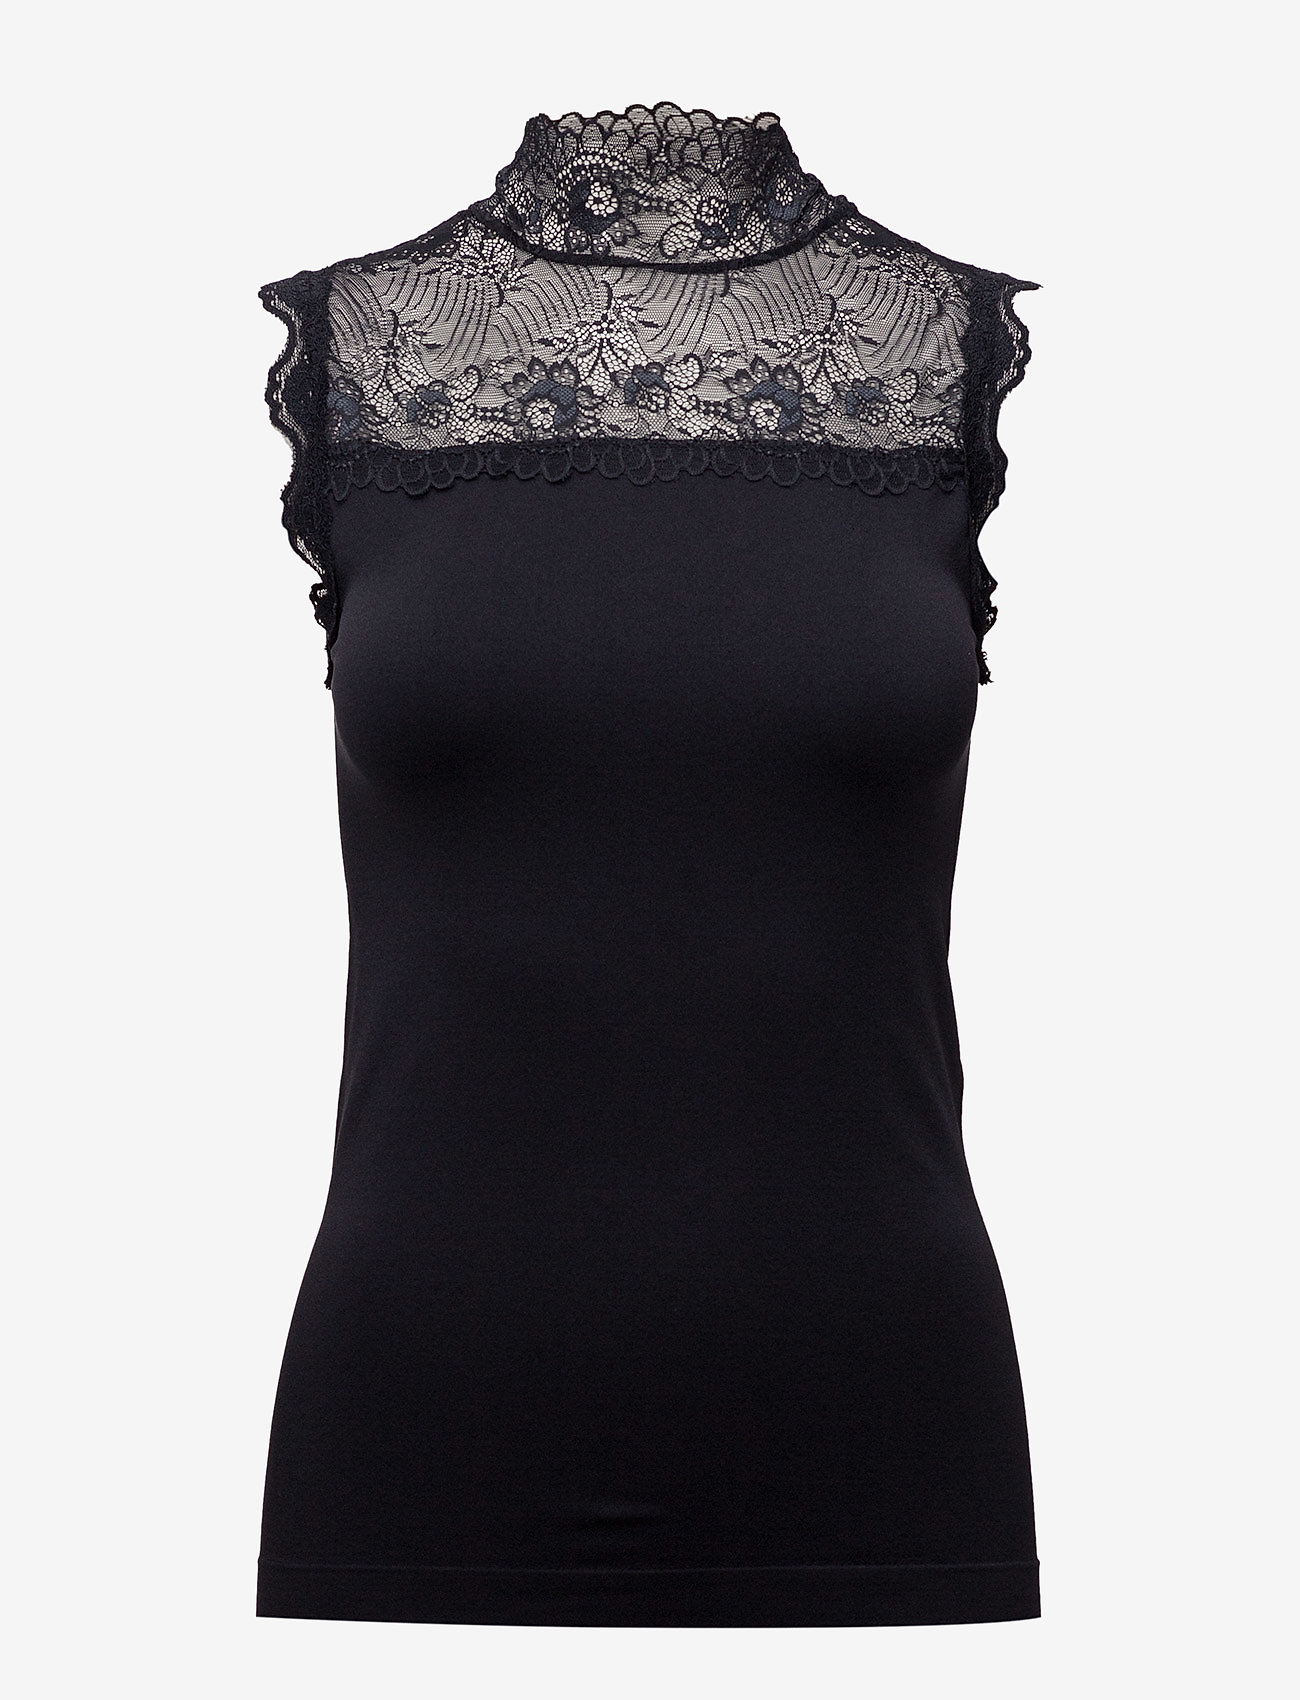 Minus - Vanessa high neck - sleeveless blouses - black - 1